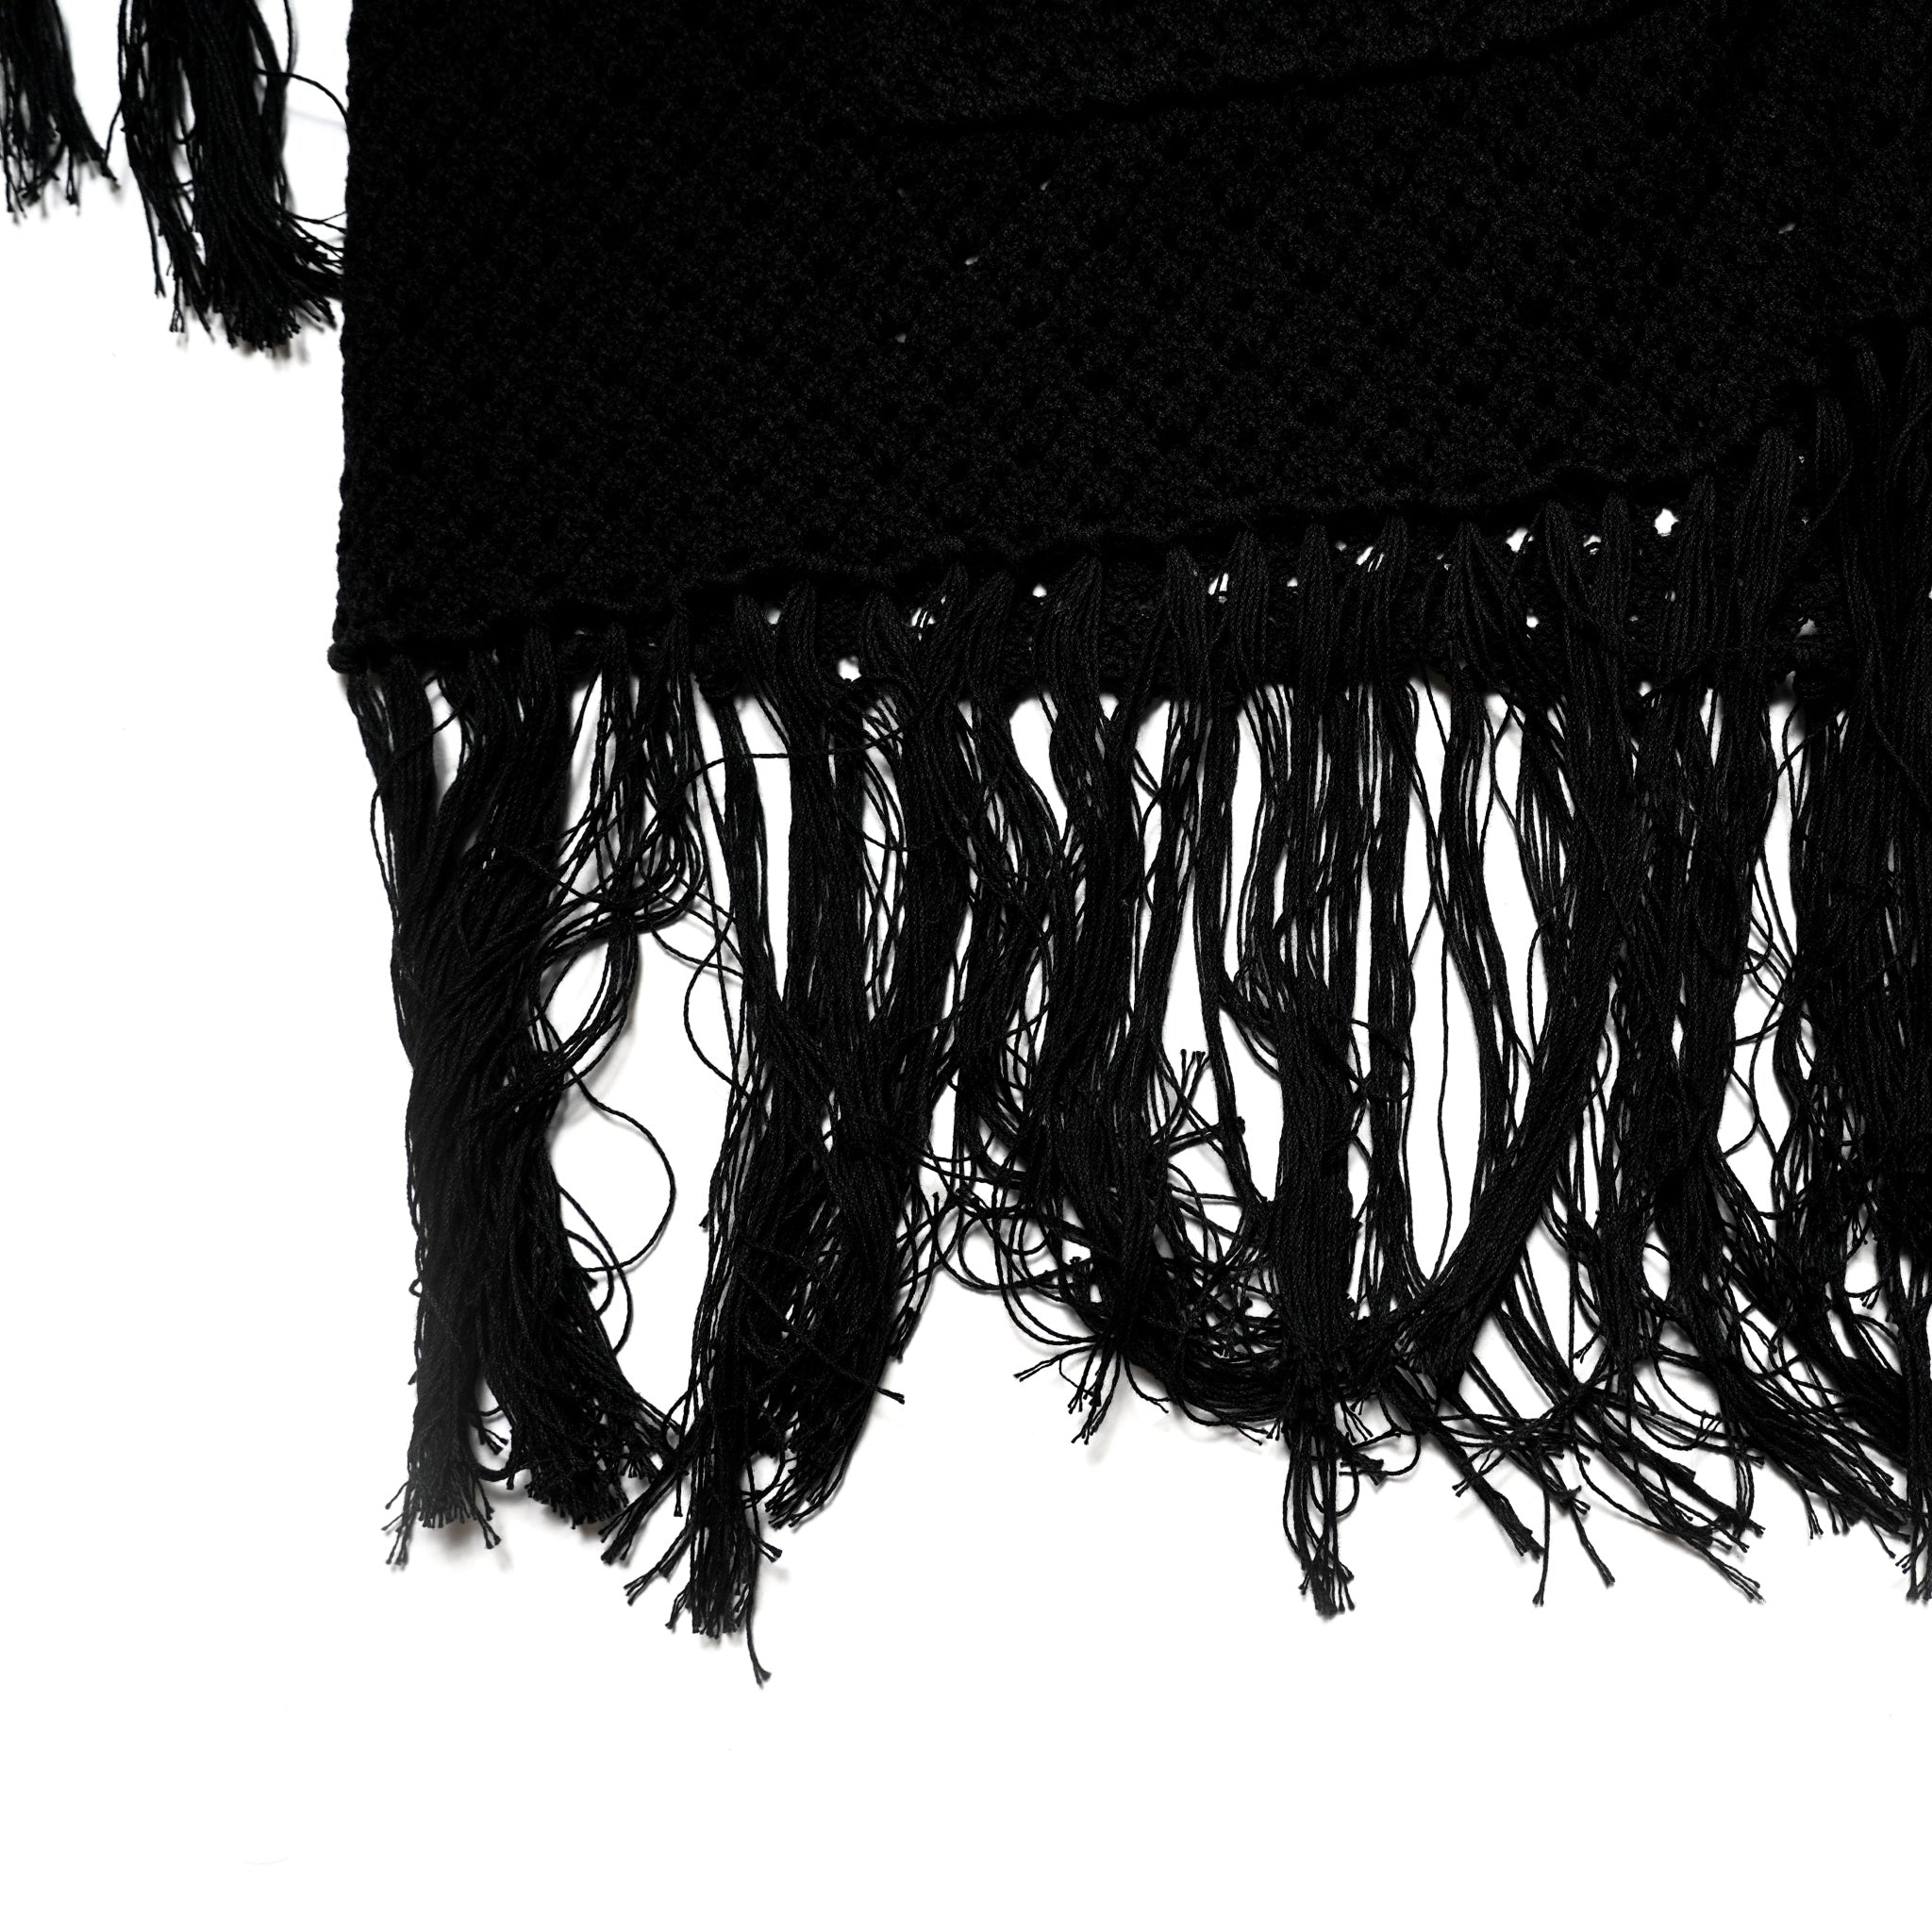 Name:Fringe Cotton Knit Shirt フリンジコットンニットシャツ | Color:Black / Natural / Amethyst / Cosmos | Size:Short/Medium【AMBERGLEAM_アンバーグリーム】| No:1185141313